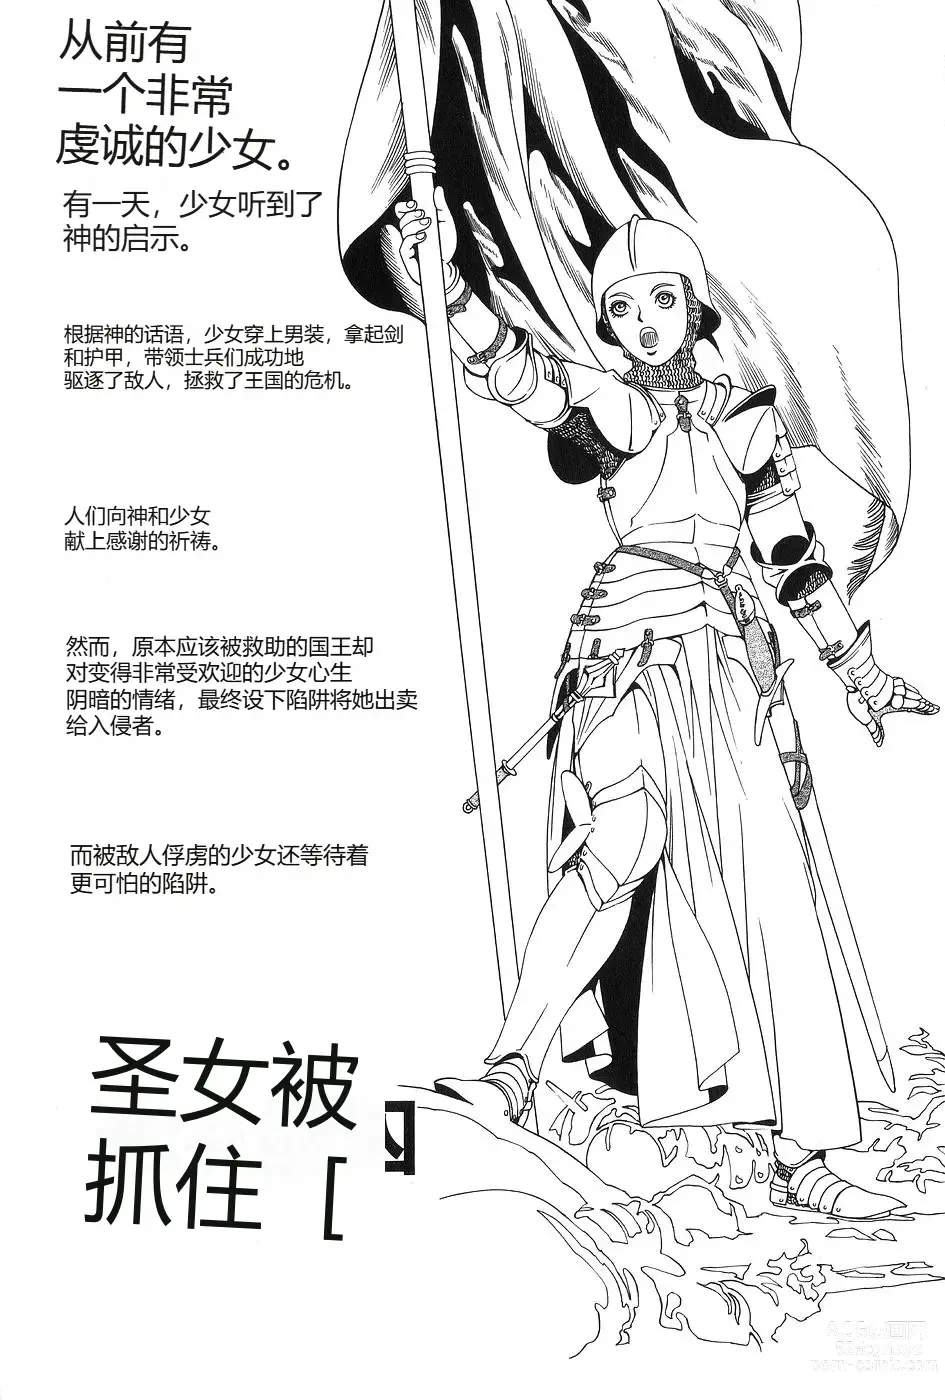 Page 185 of manga Dark Age